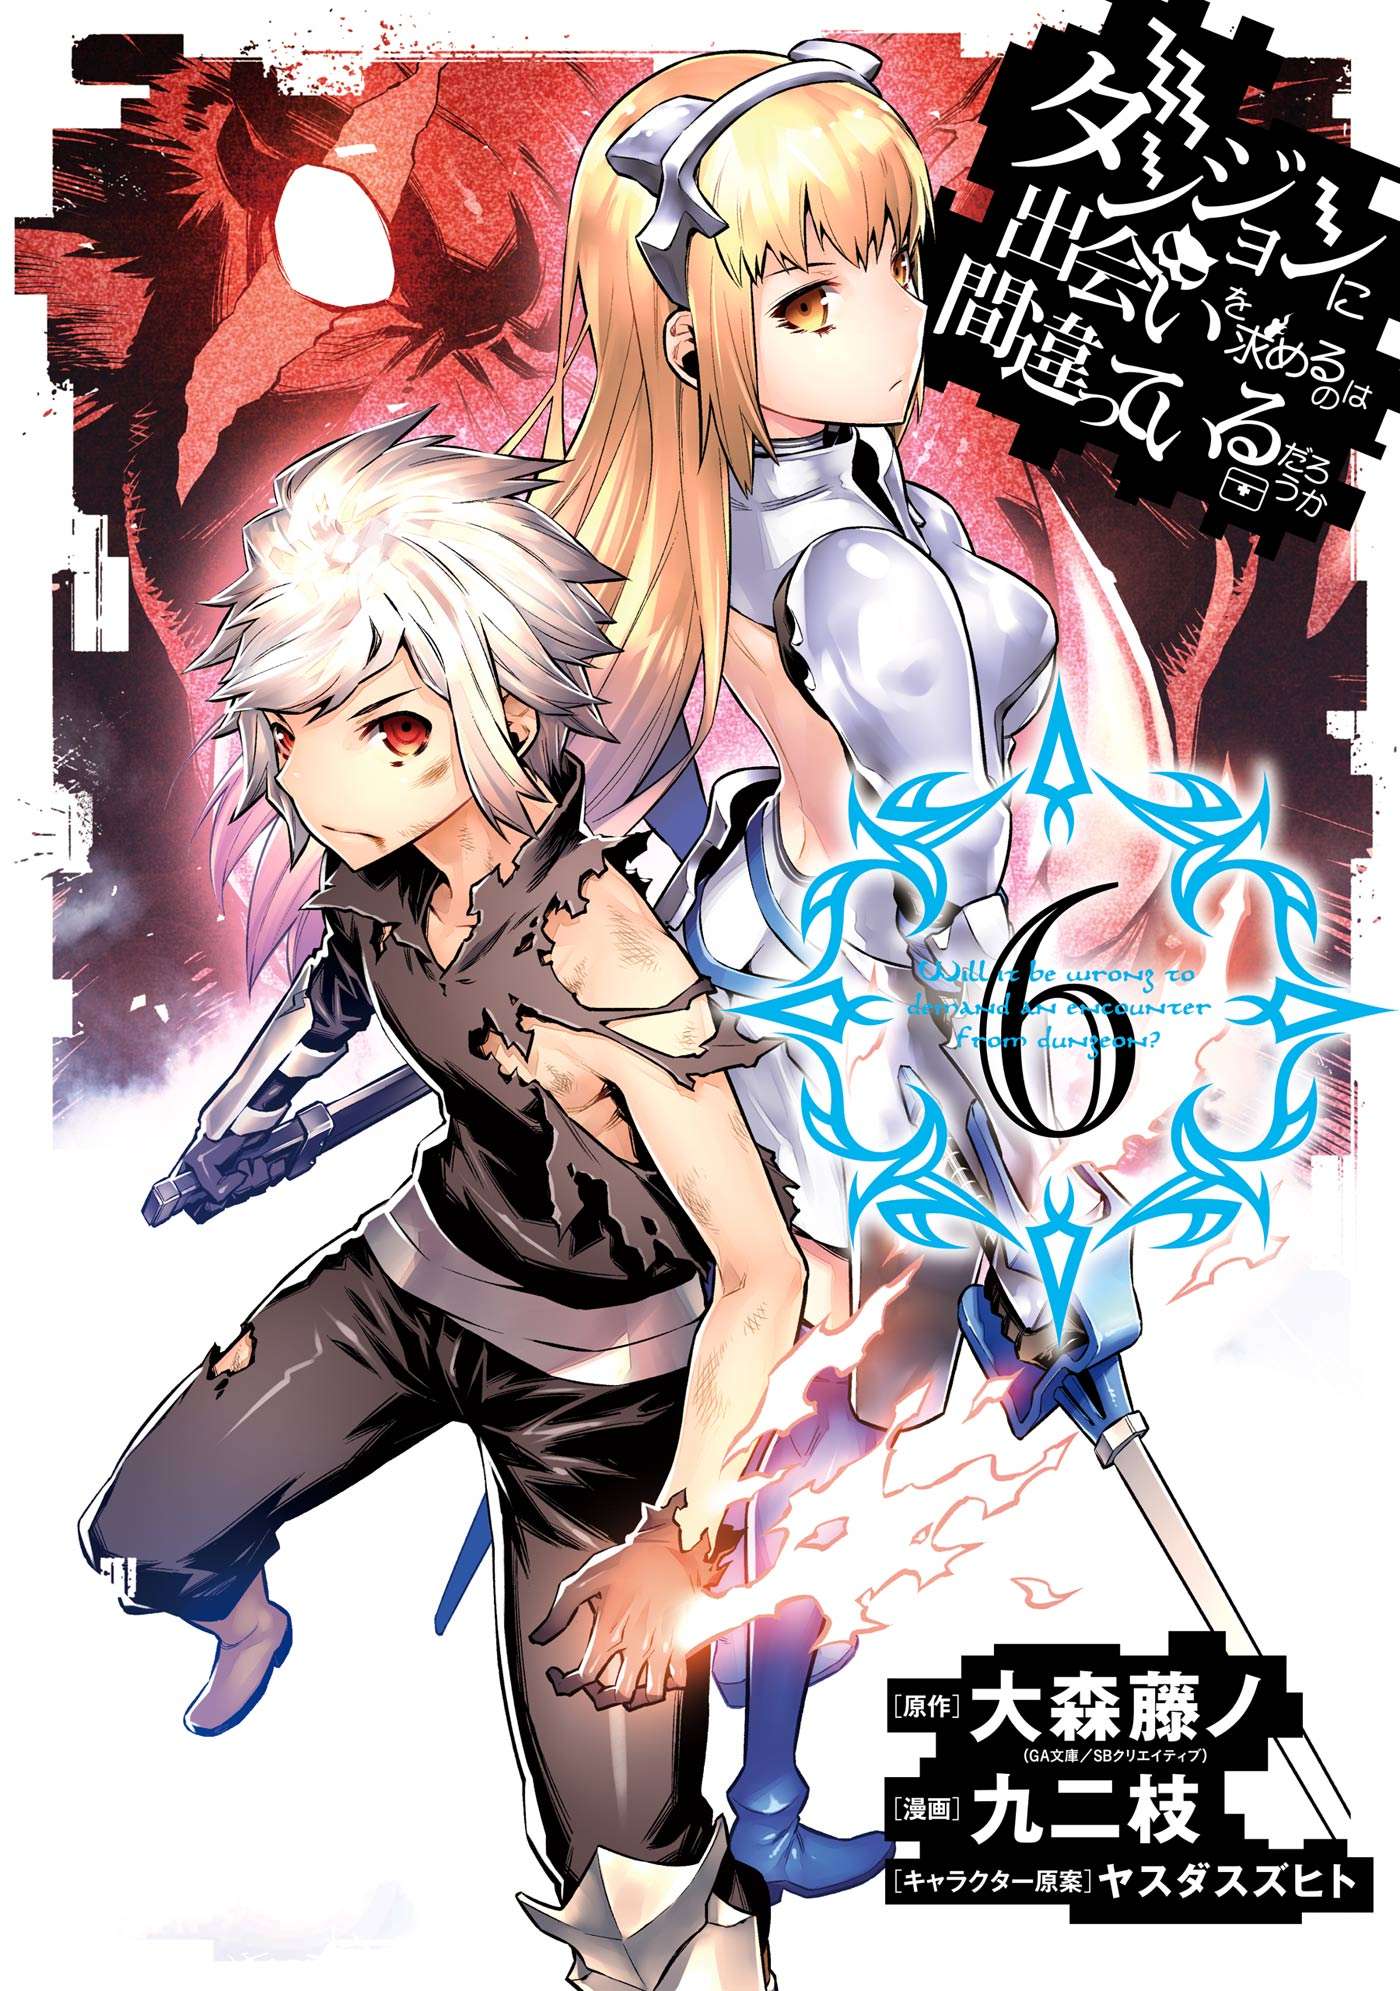 DanMachi Light Novel Volume 16, DanMachi Wiki